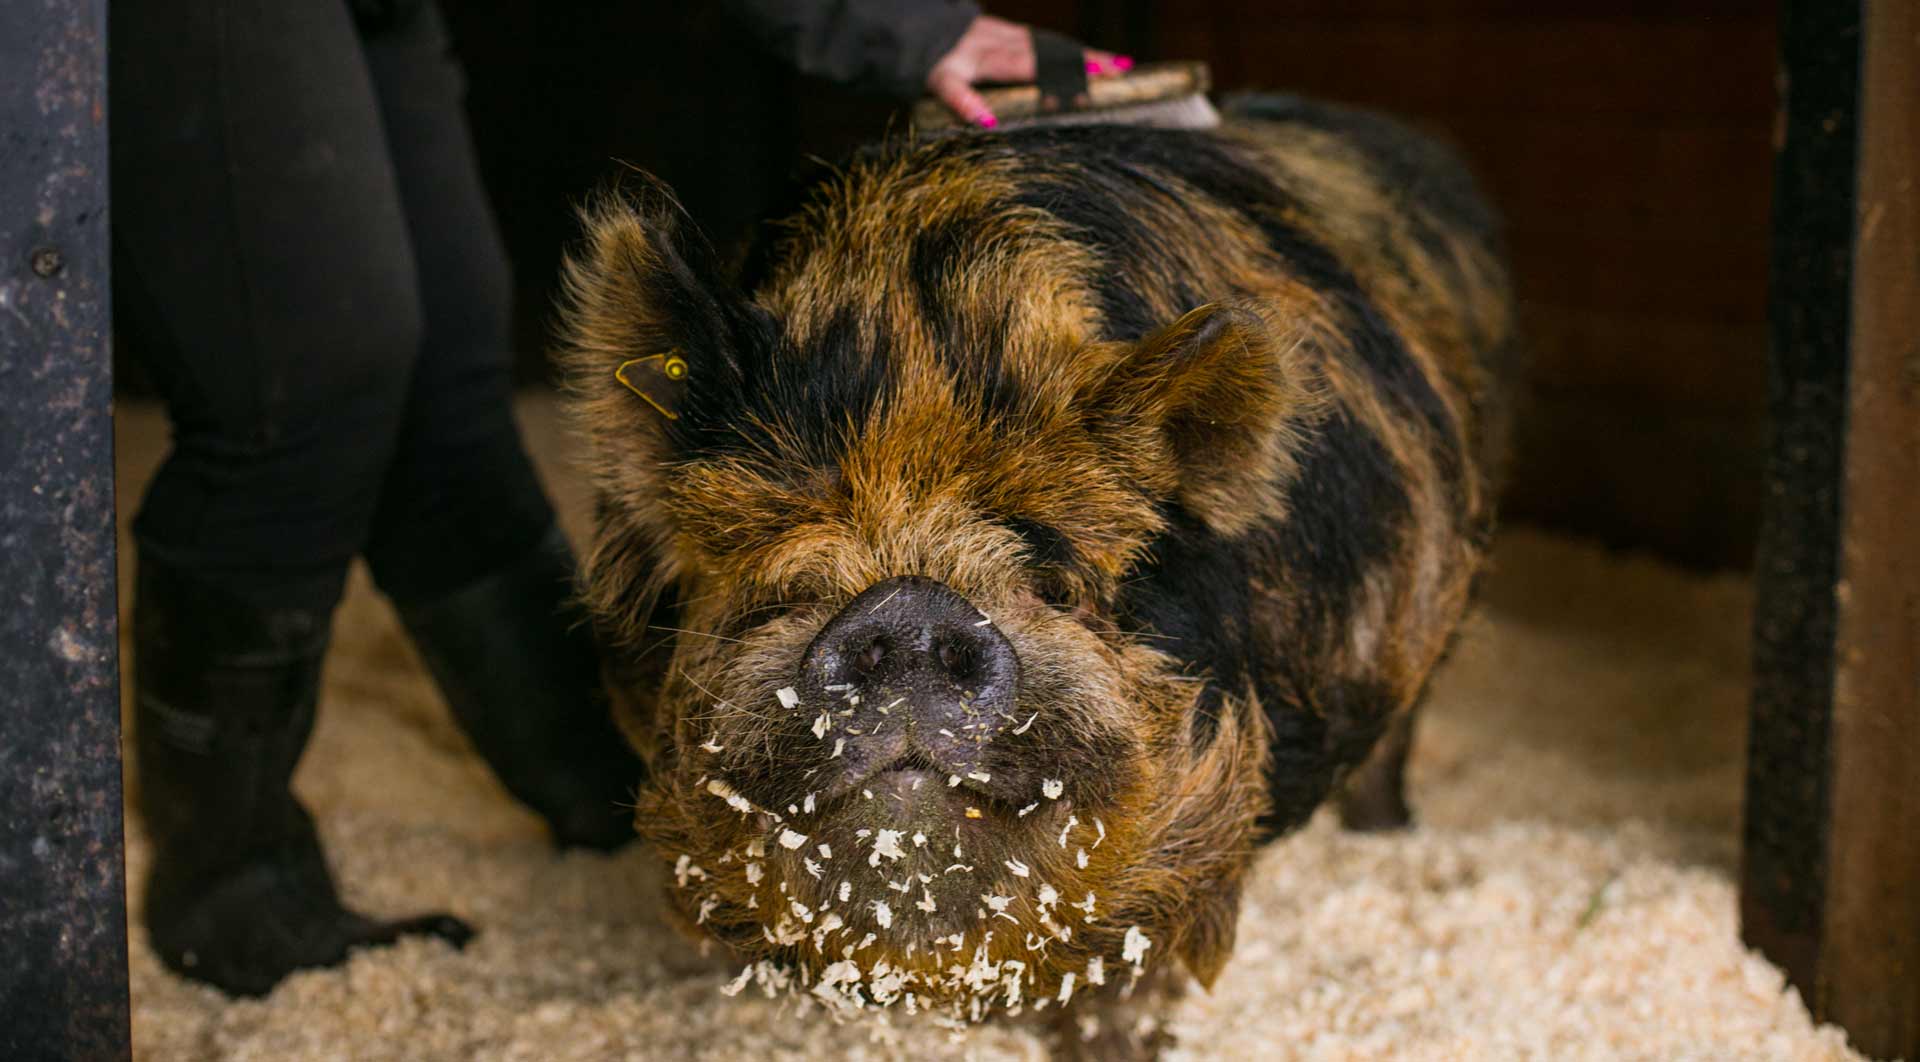 pig laying on baled wood shavings | Klassen Wood Co.